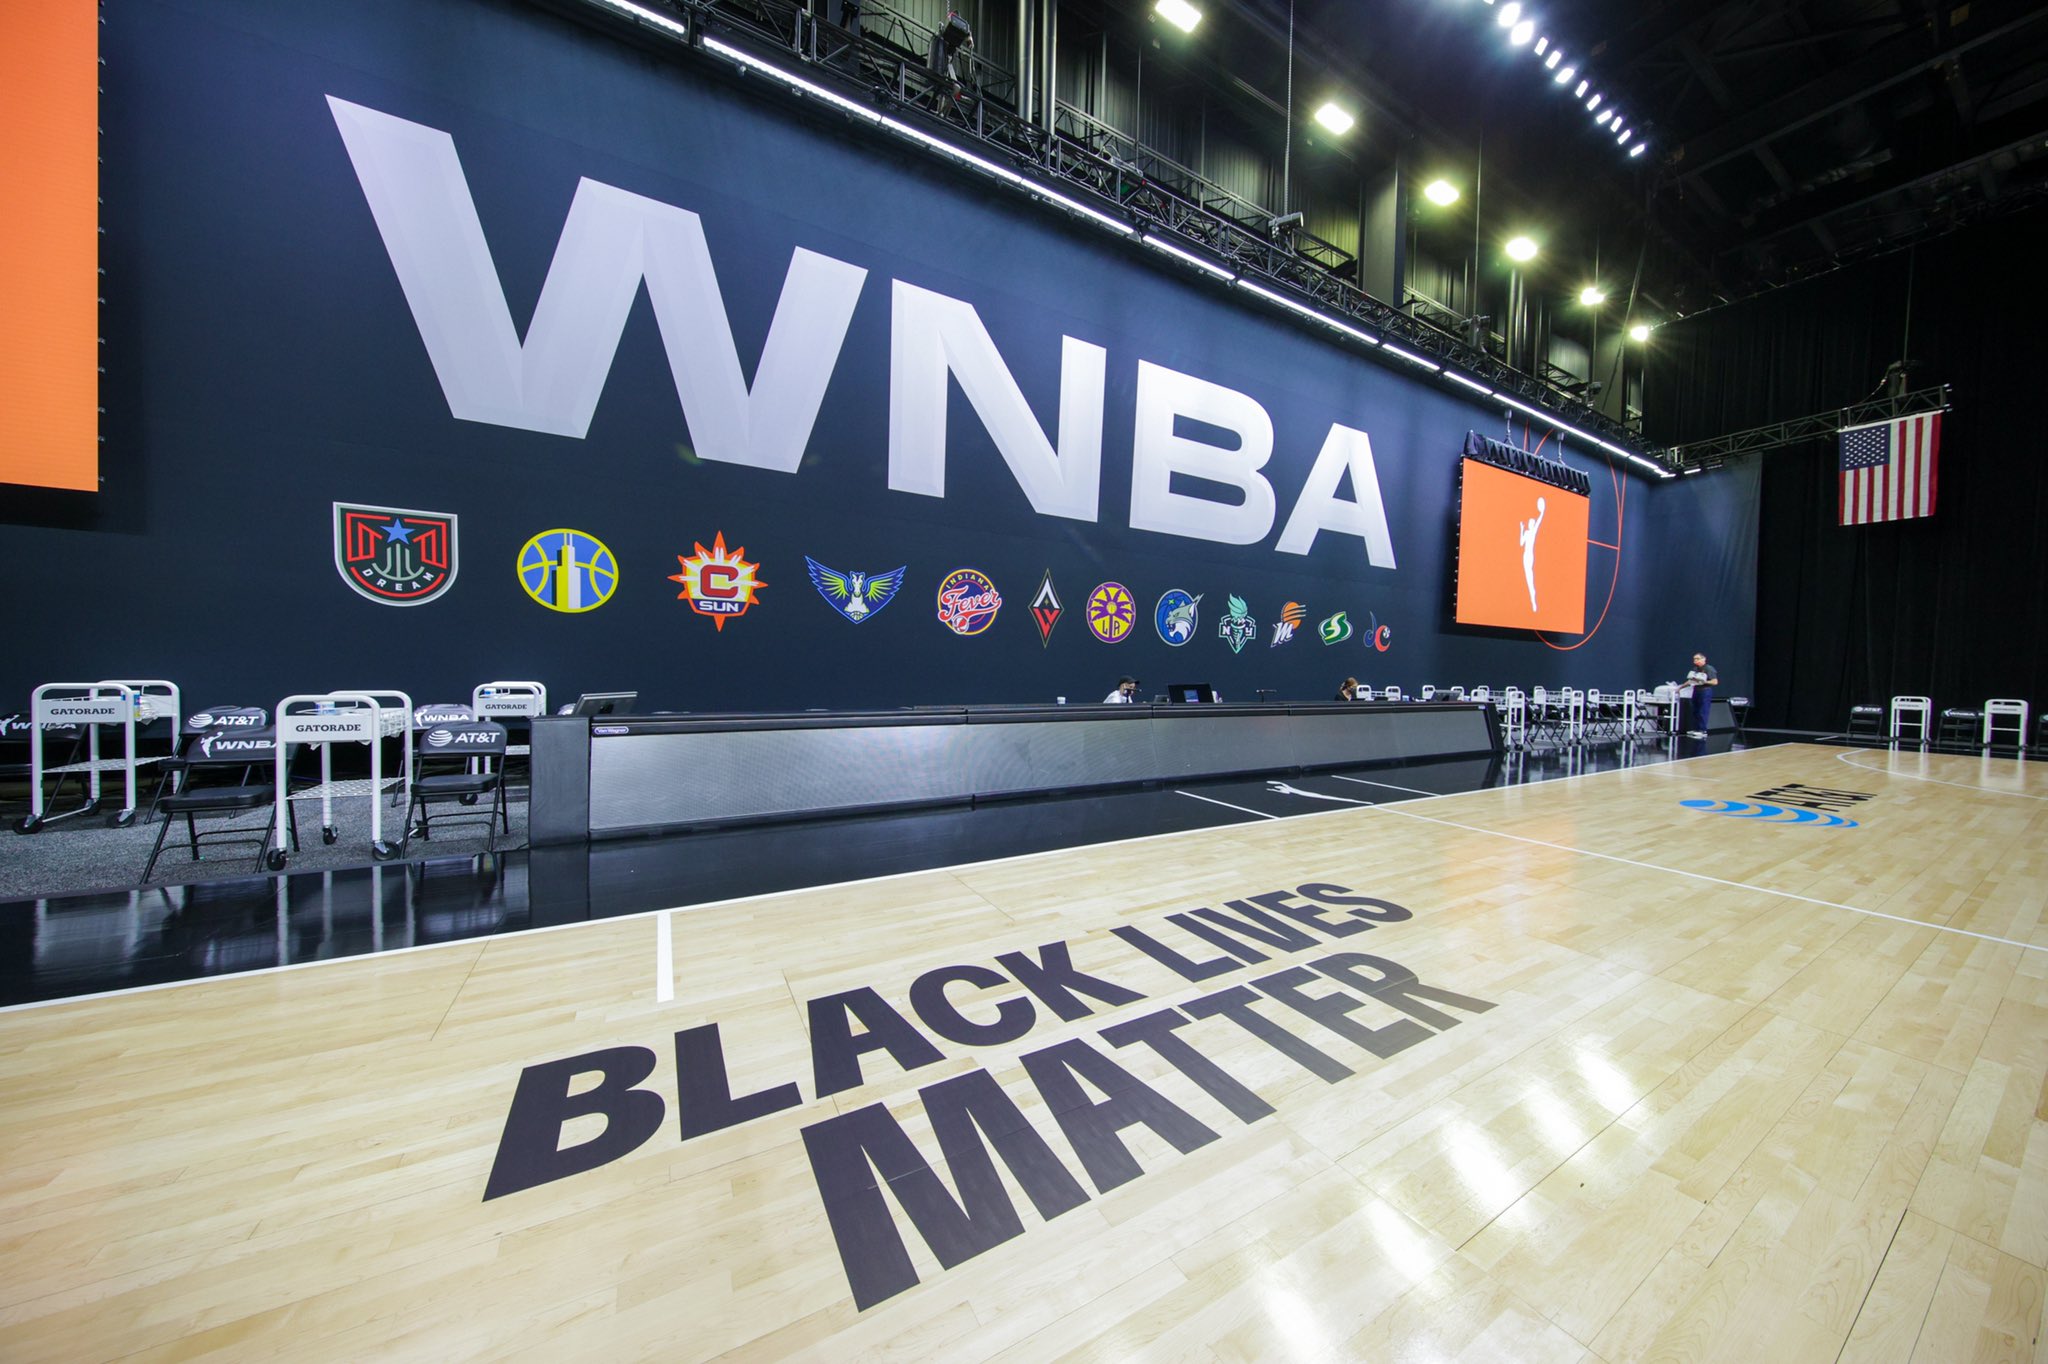 WNBA Black Lives Matter